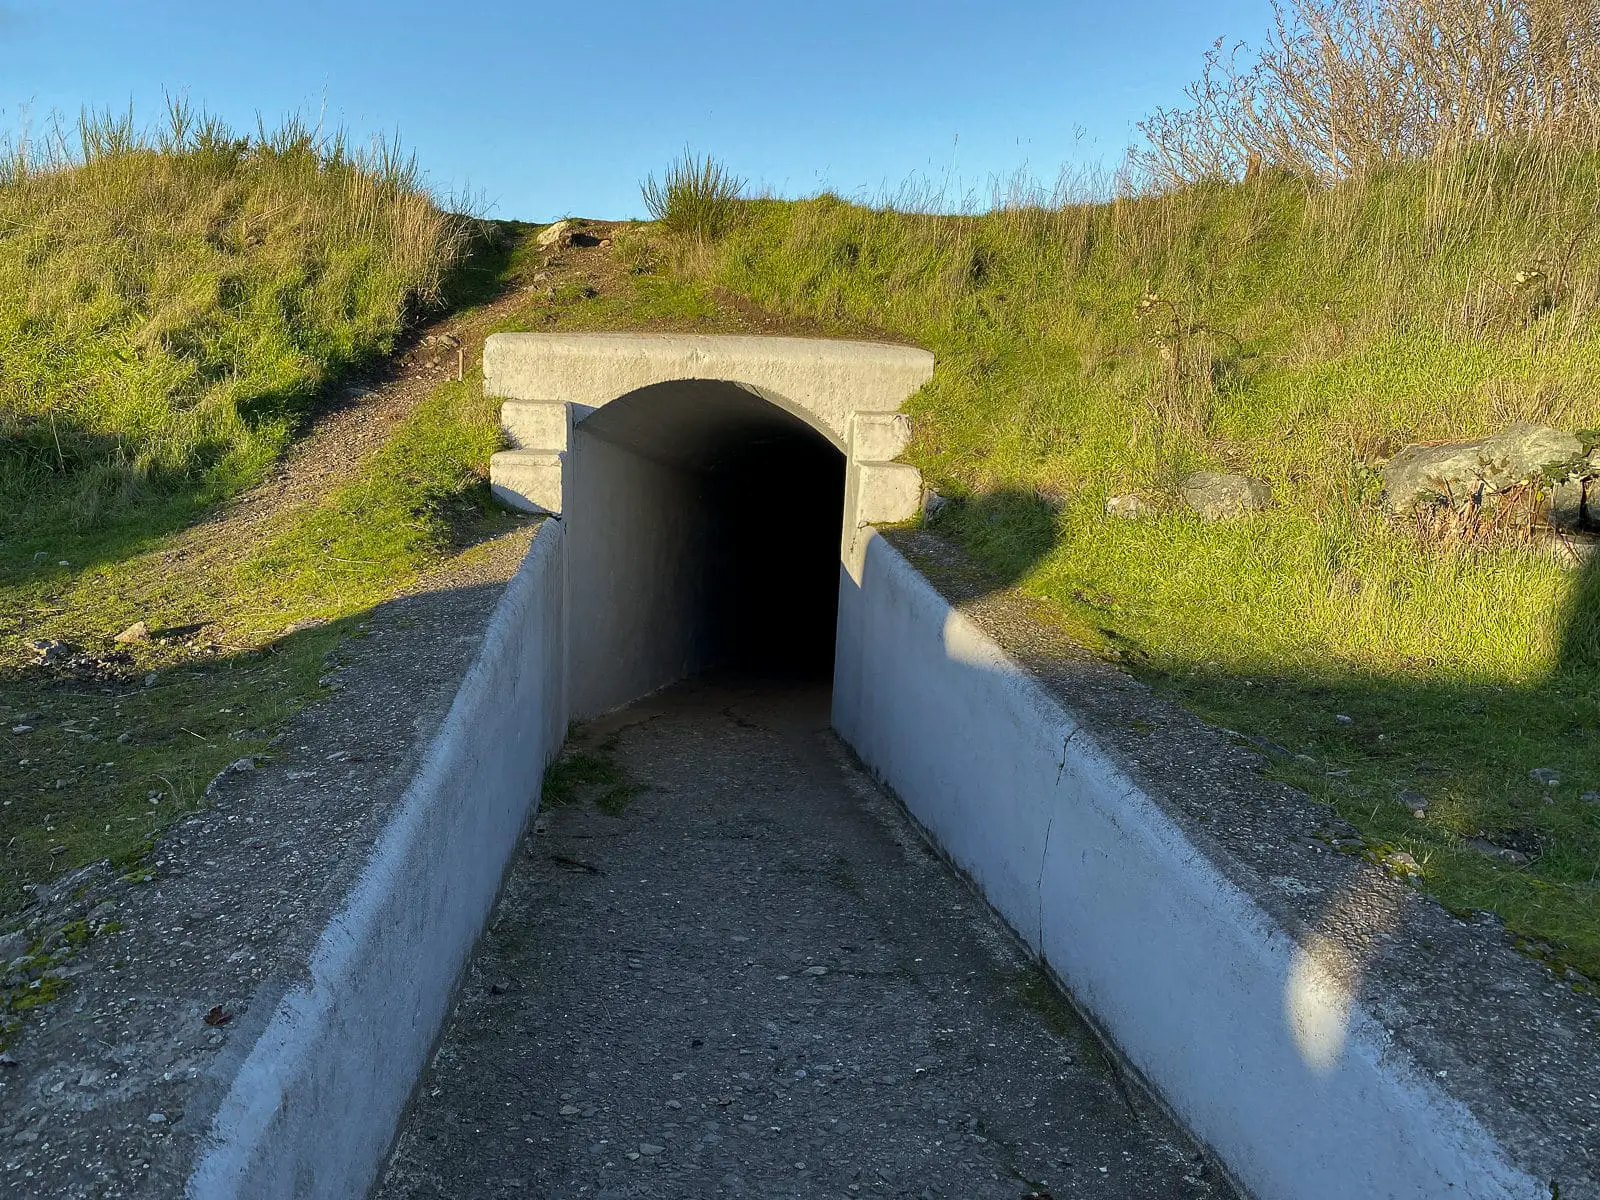 The tunnel at Macaulay Point Park